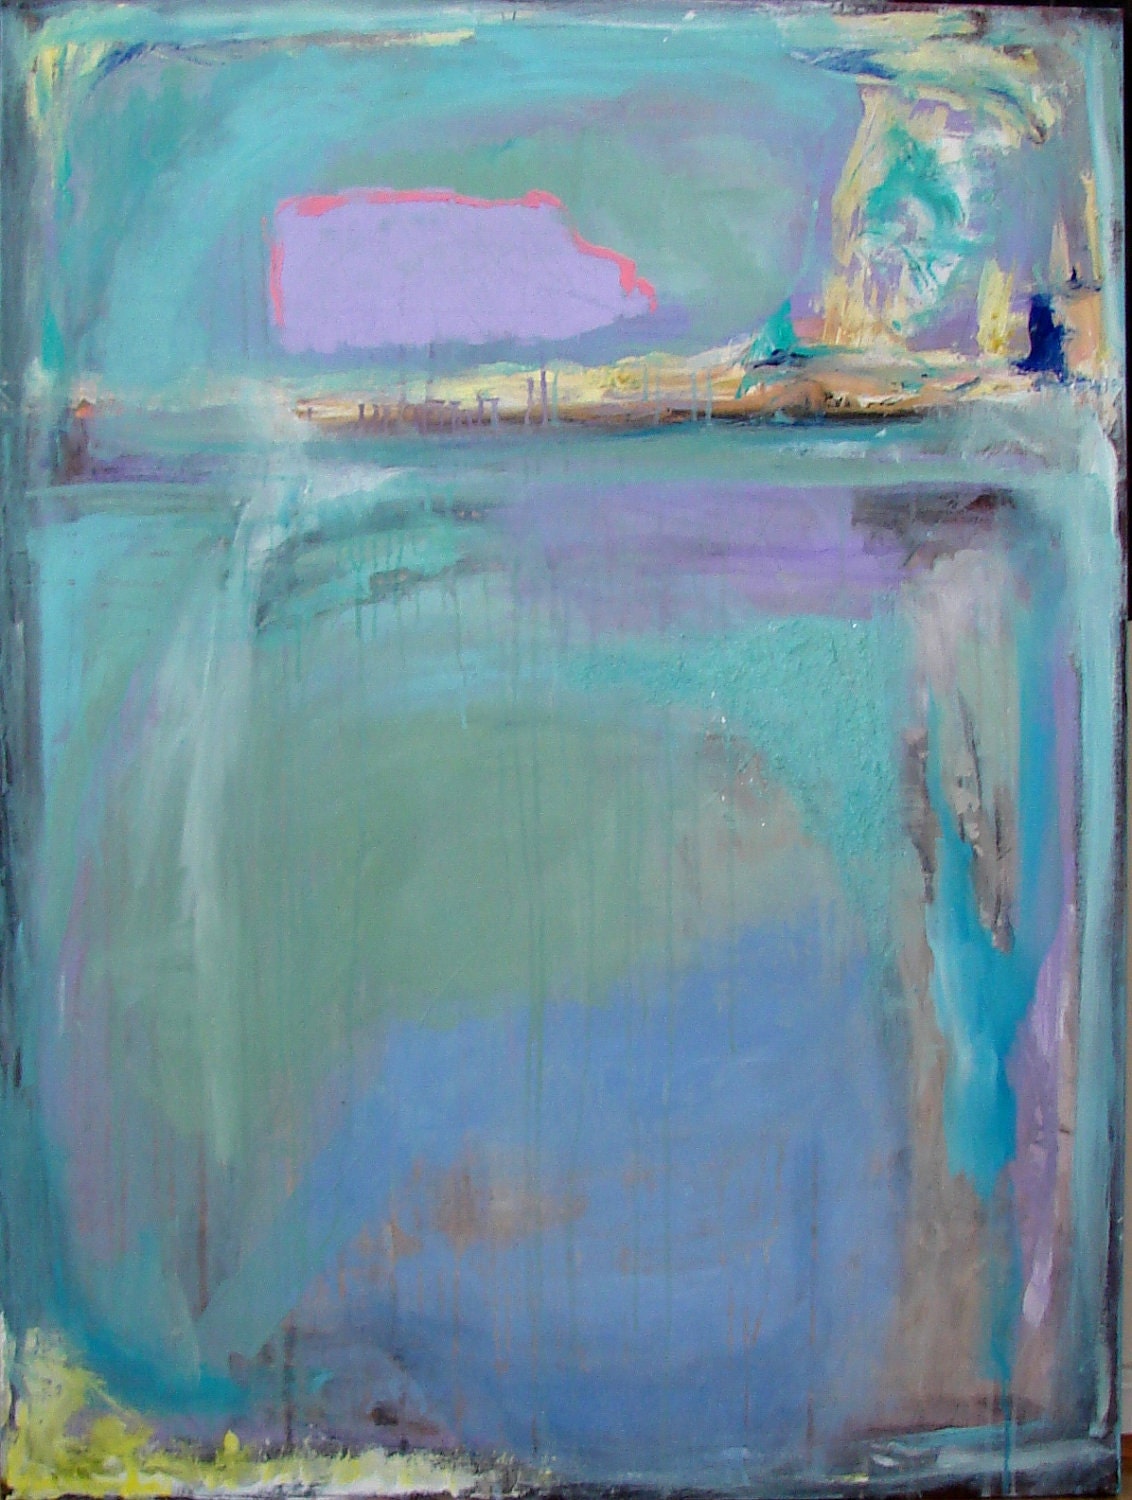 Abstract Painting Original mixed media art 36 x 48 blue, lavender, yellow